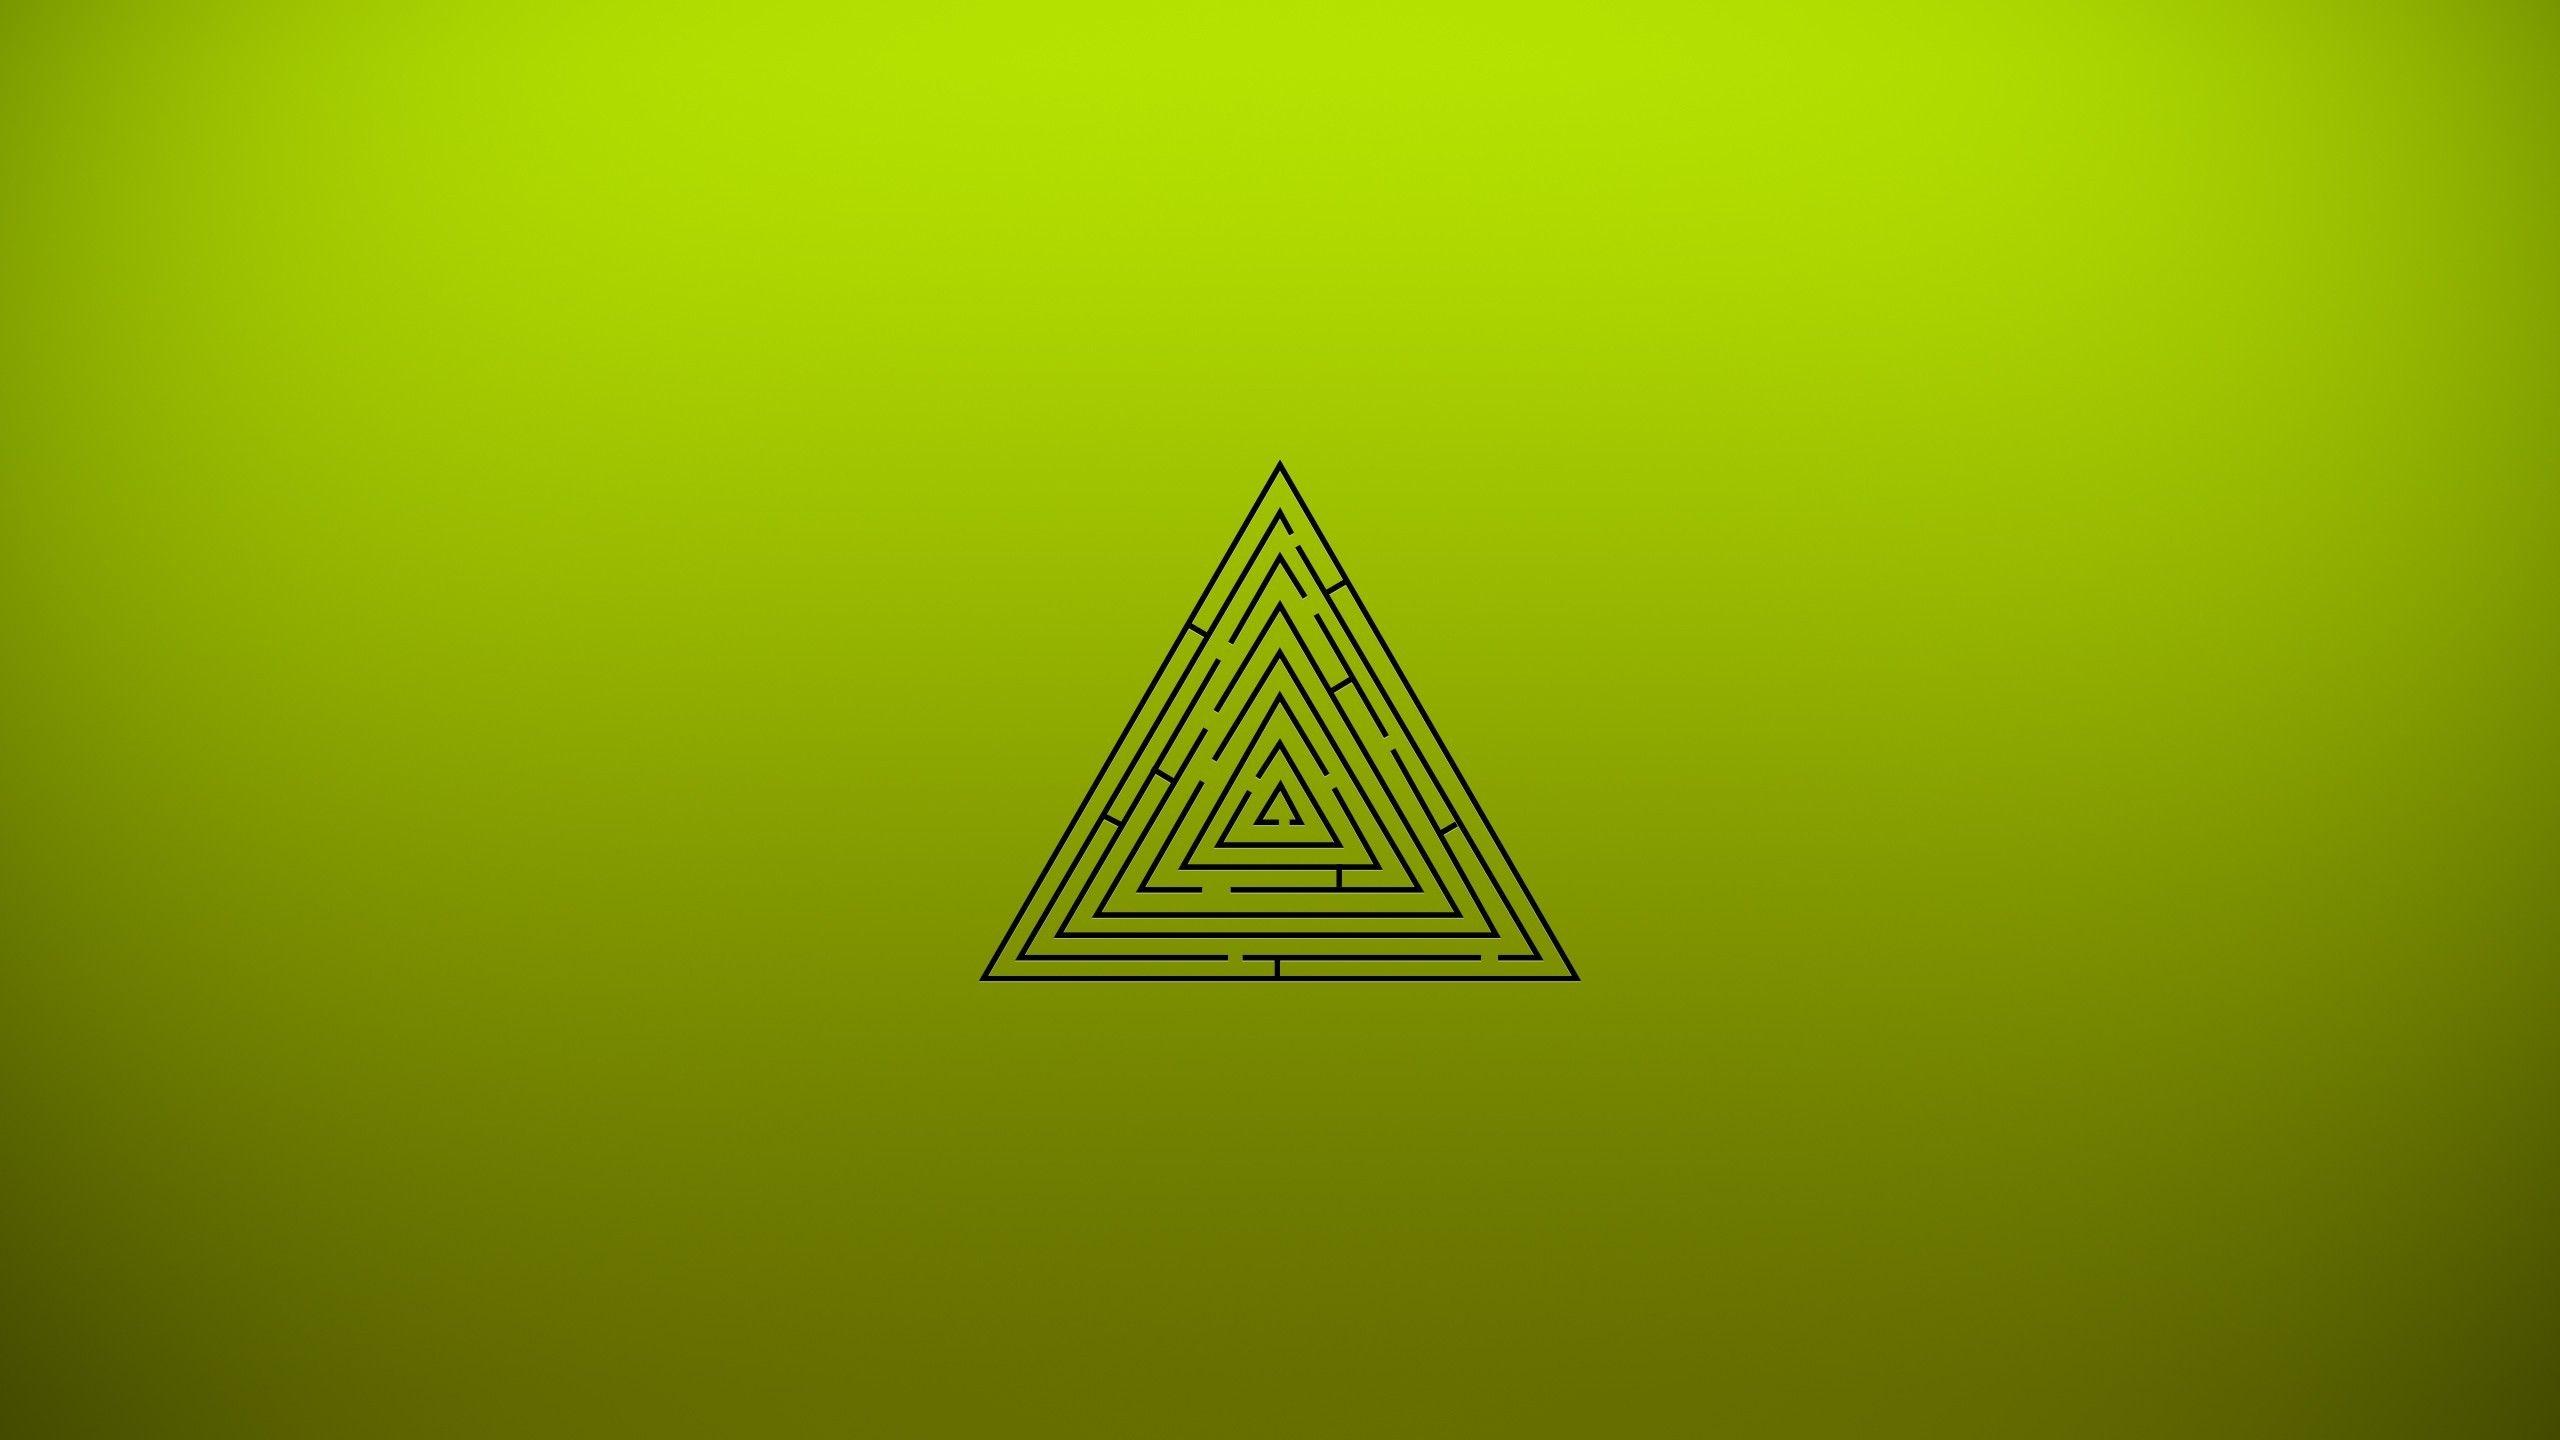 Yellow Triangle with Green Circle Logo - Wallpaper : illustration, text, logo, green, yellow, triangle ...